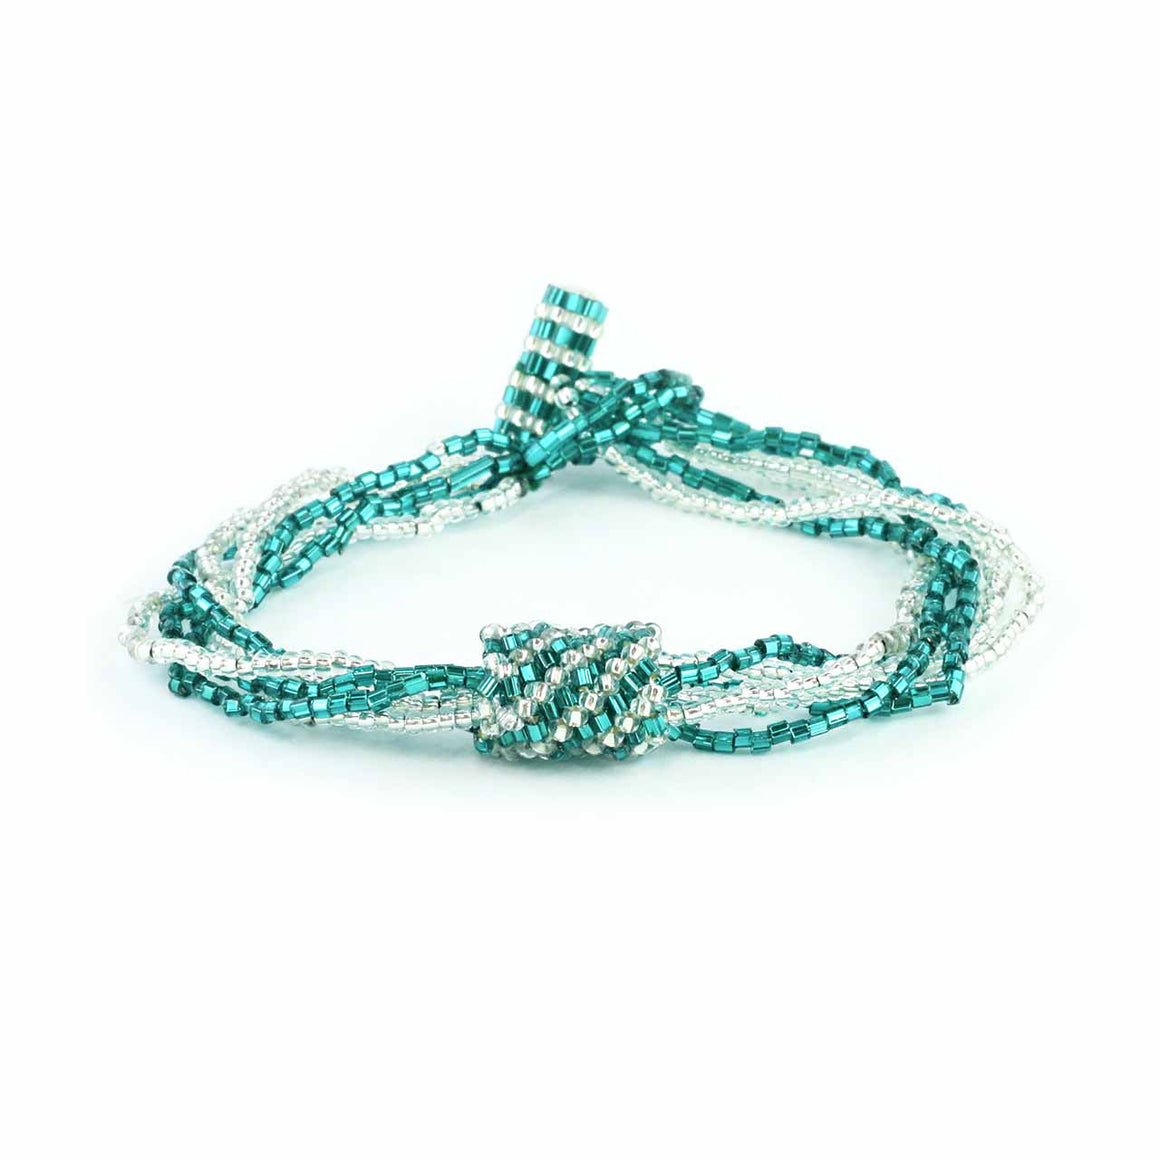 5 Strand Bracelet with Decorative Crocheted Spiral